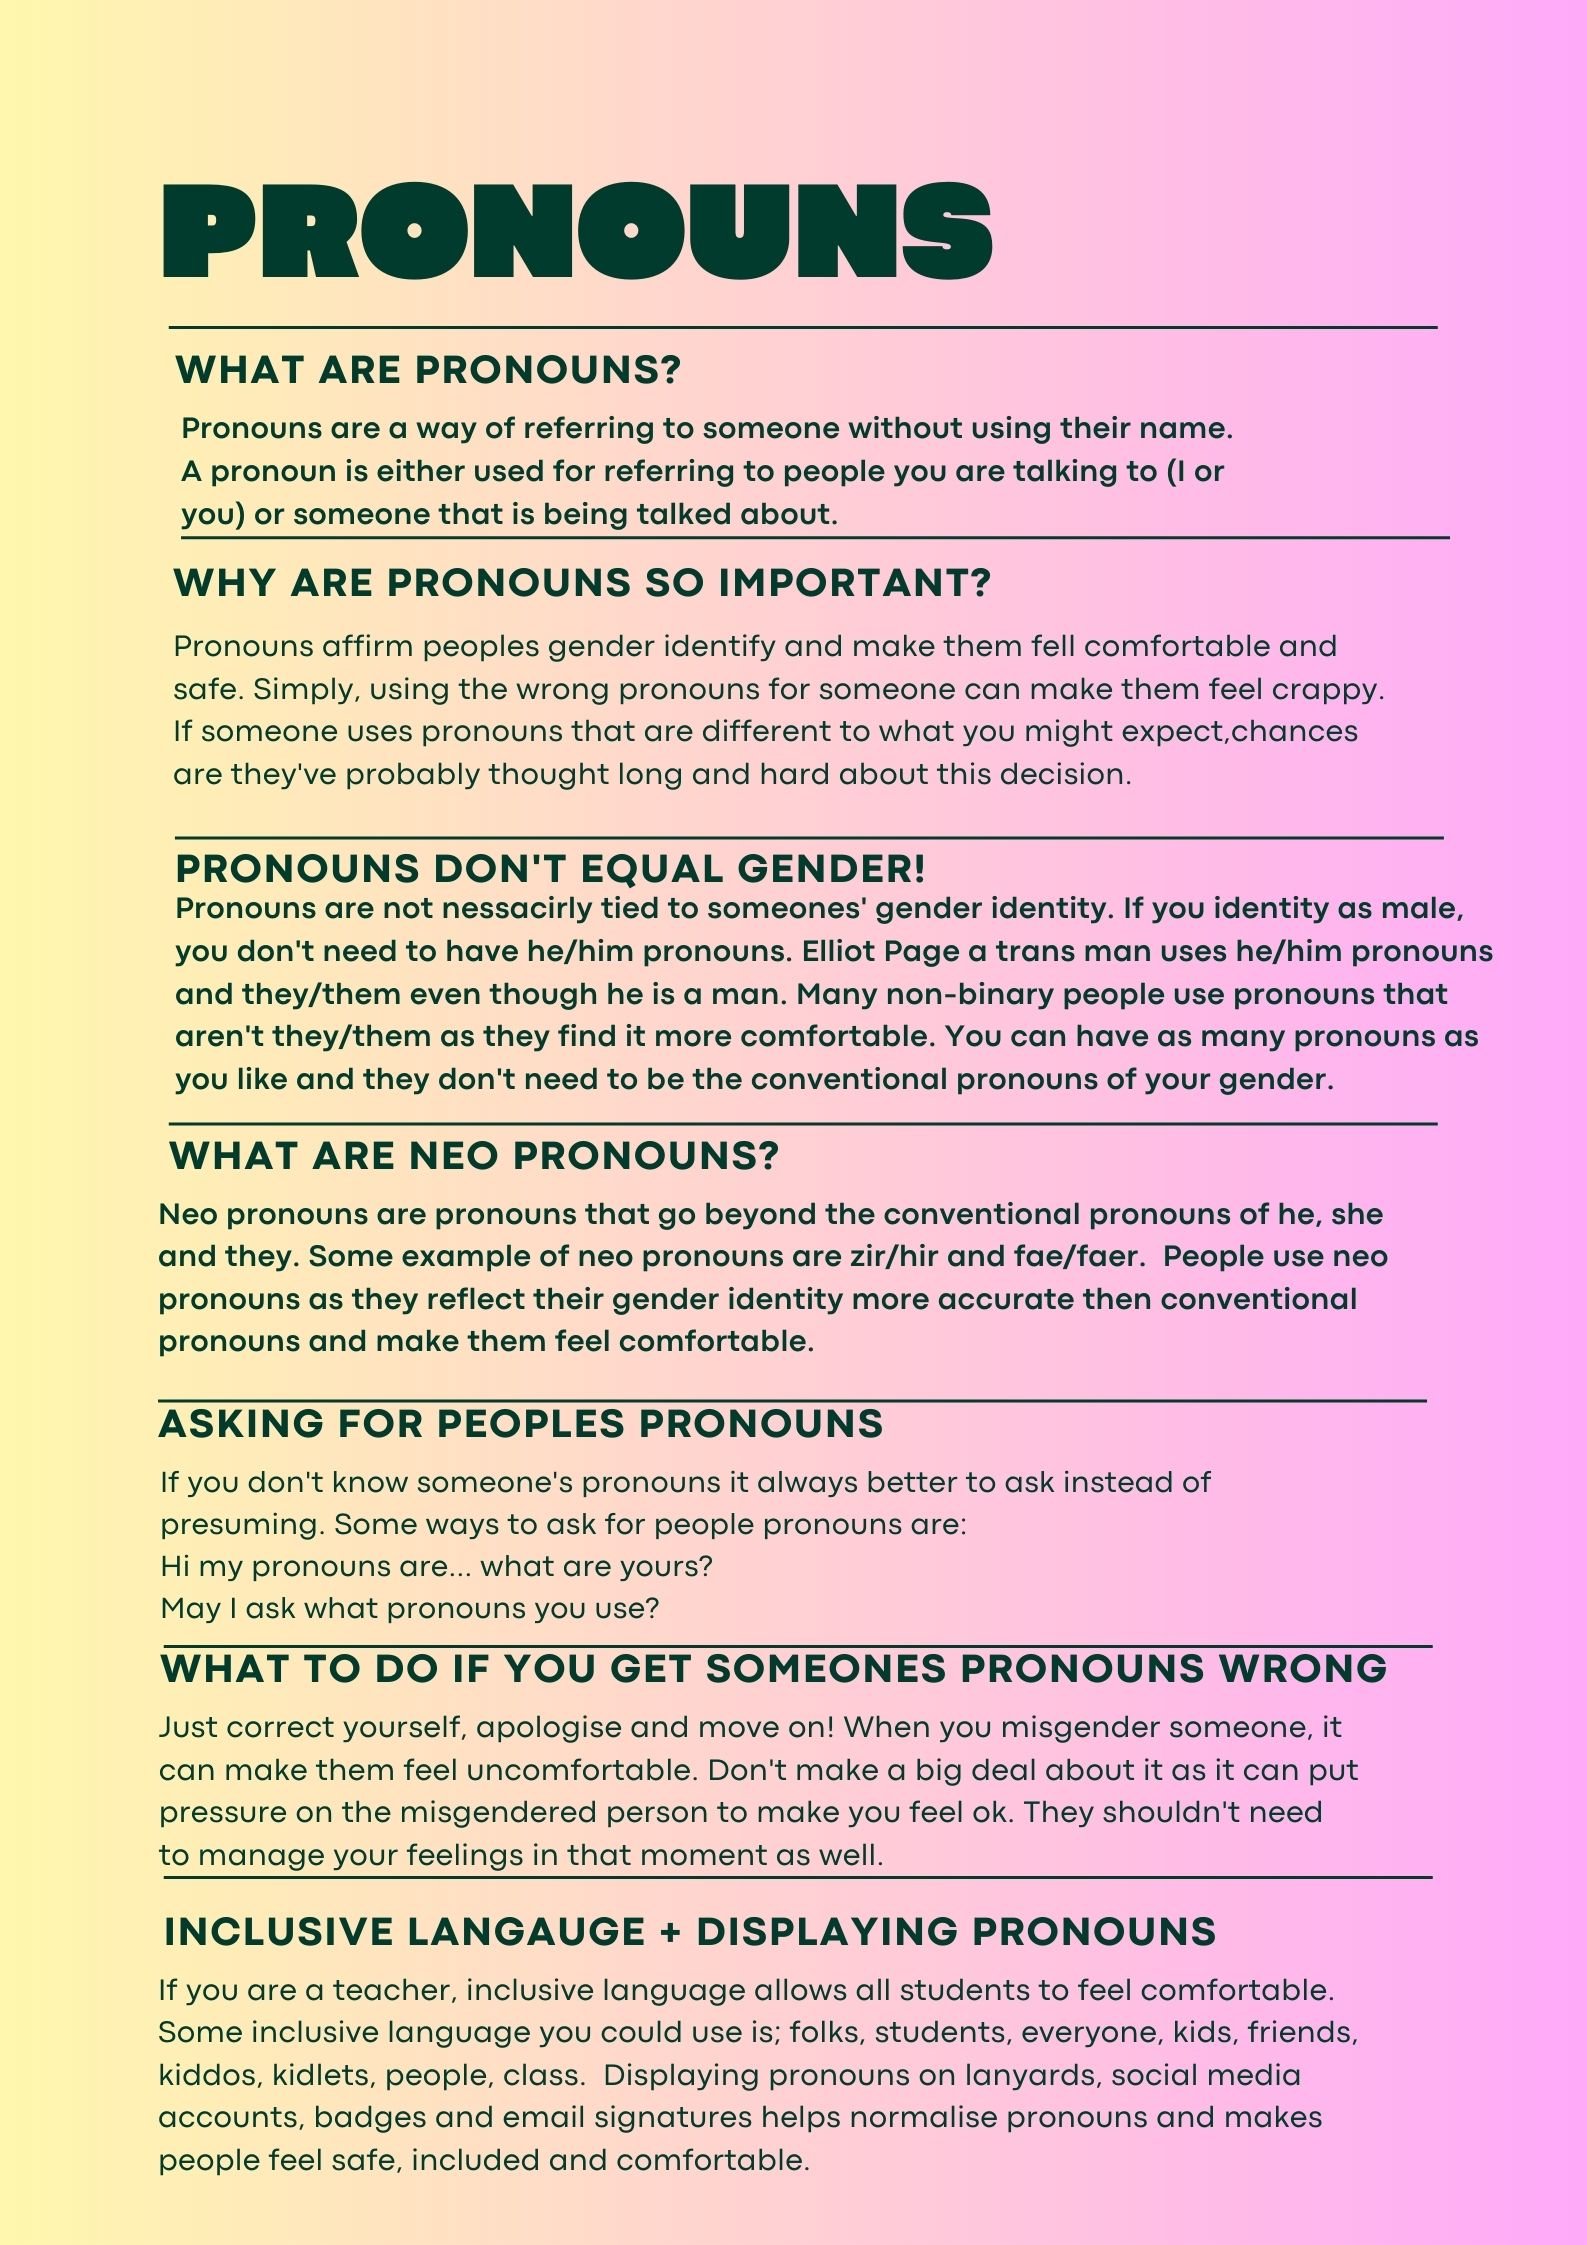 Copy of Pronouns.jpg